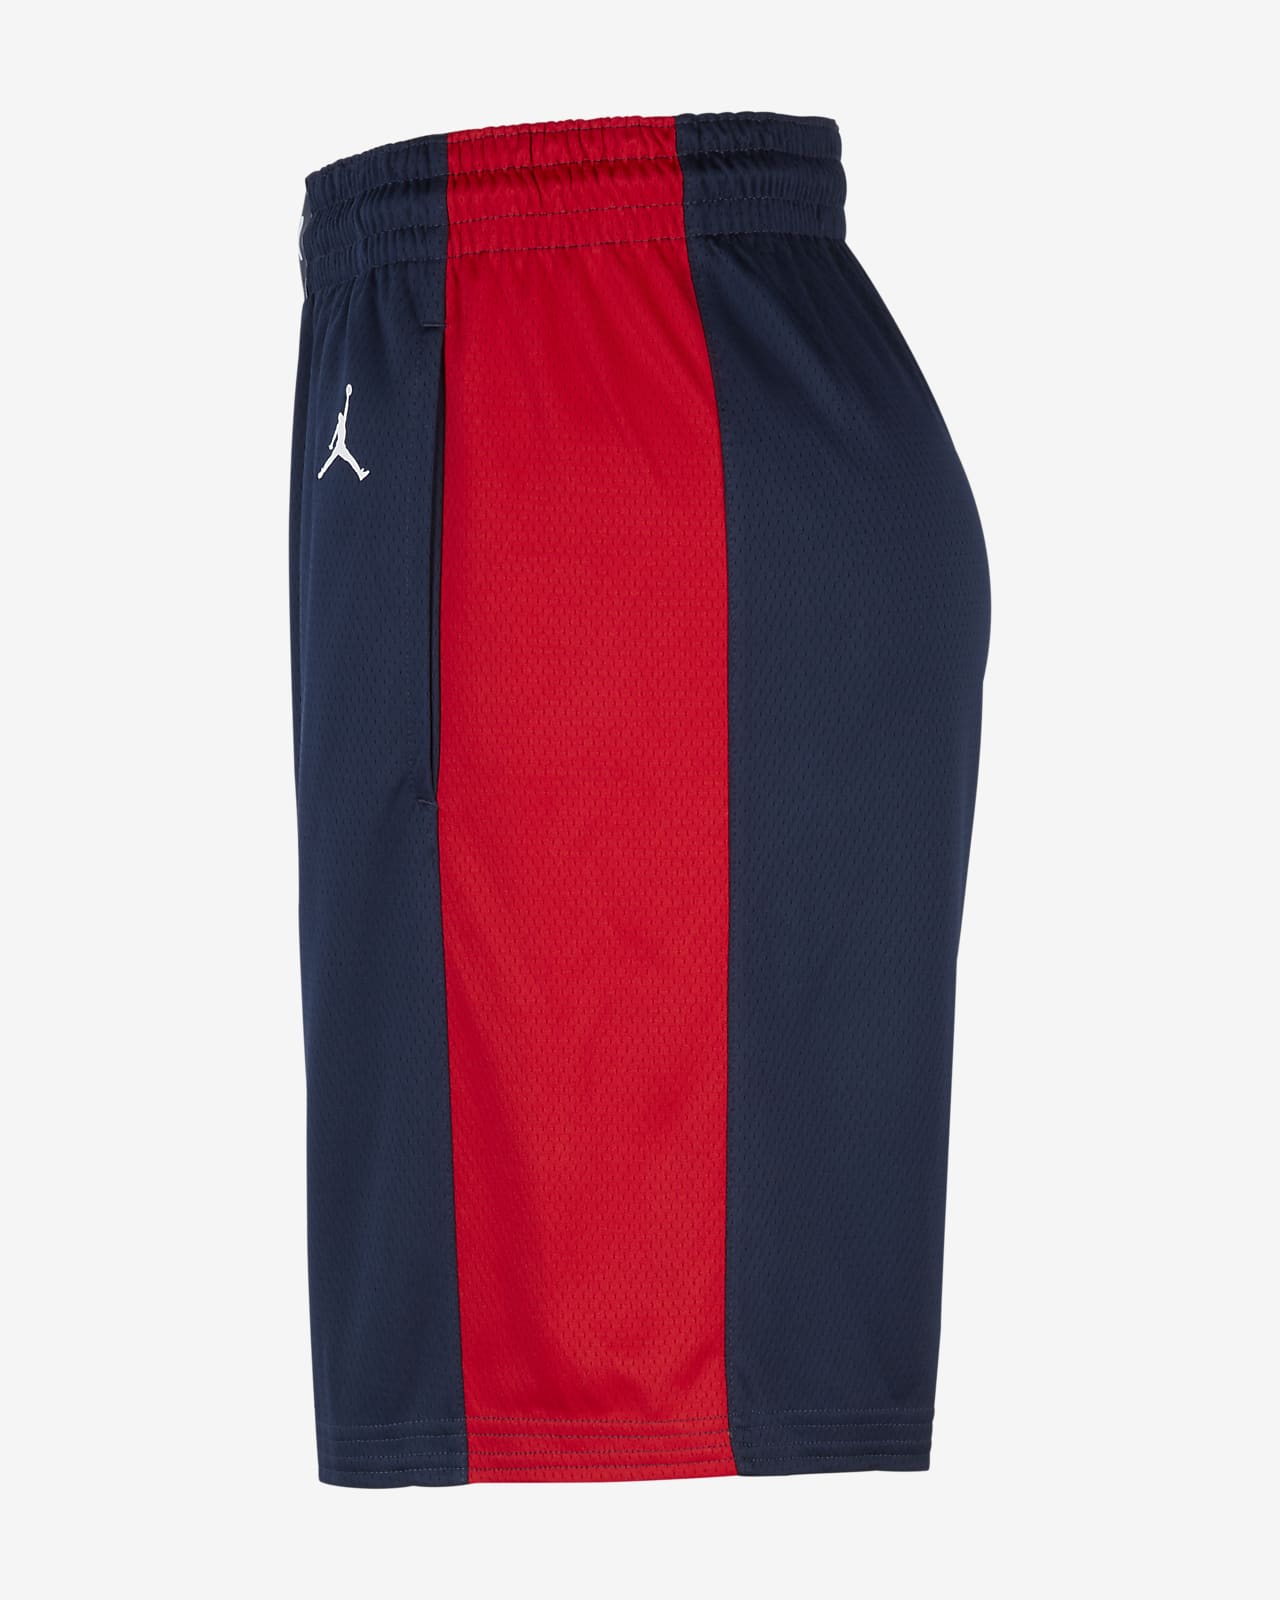 France Jordan (Road) Limited Men's Basketball Shorts. Nike CZ